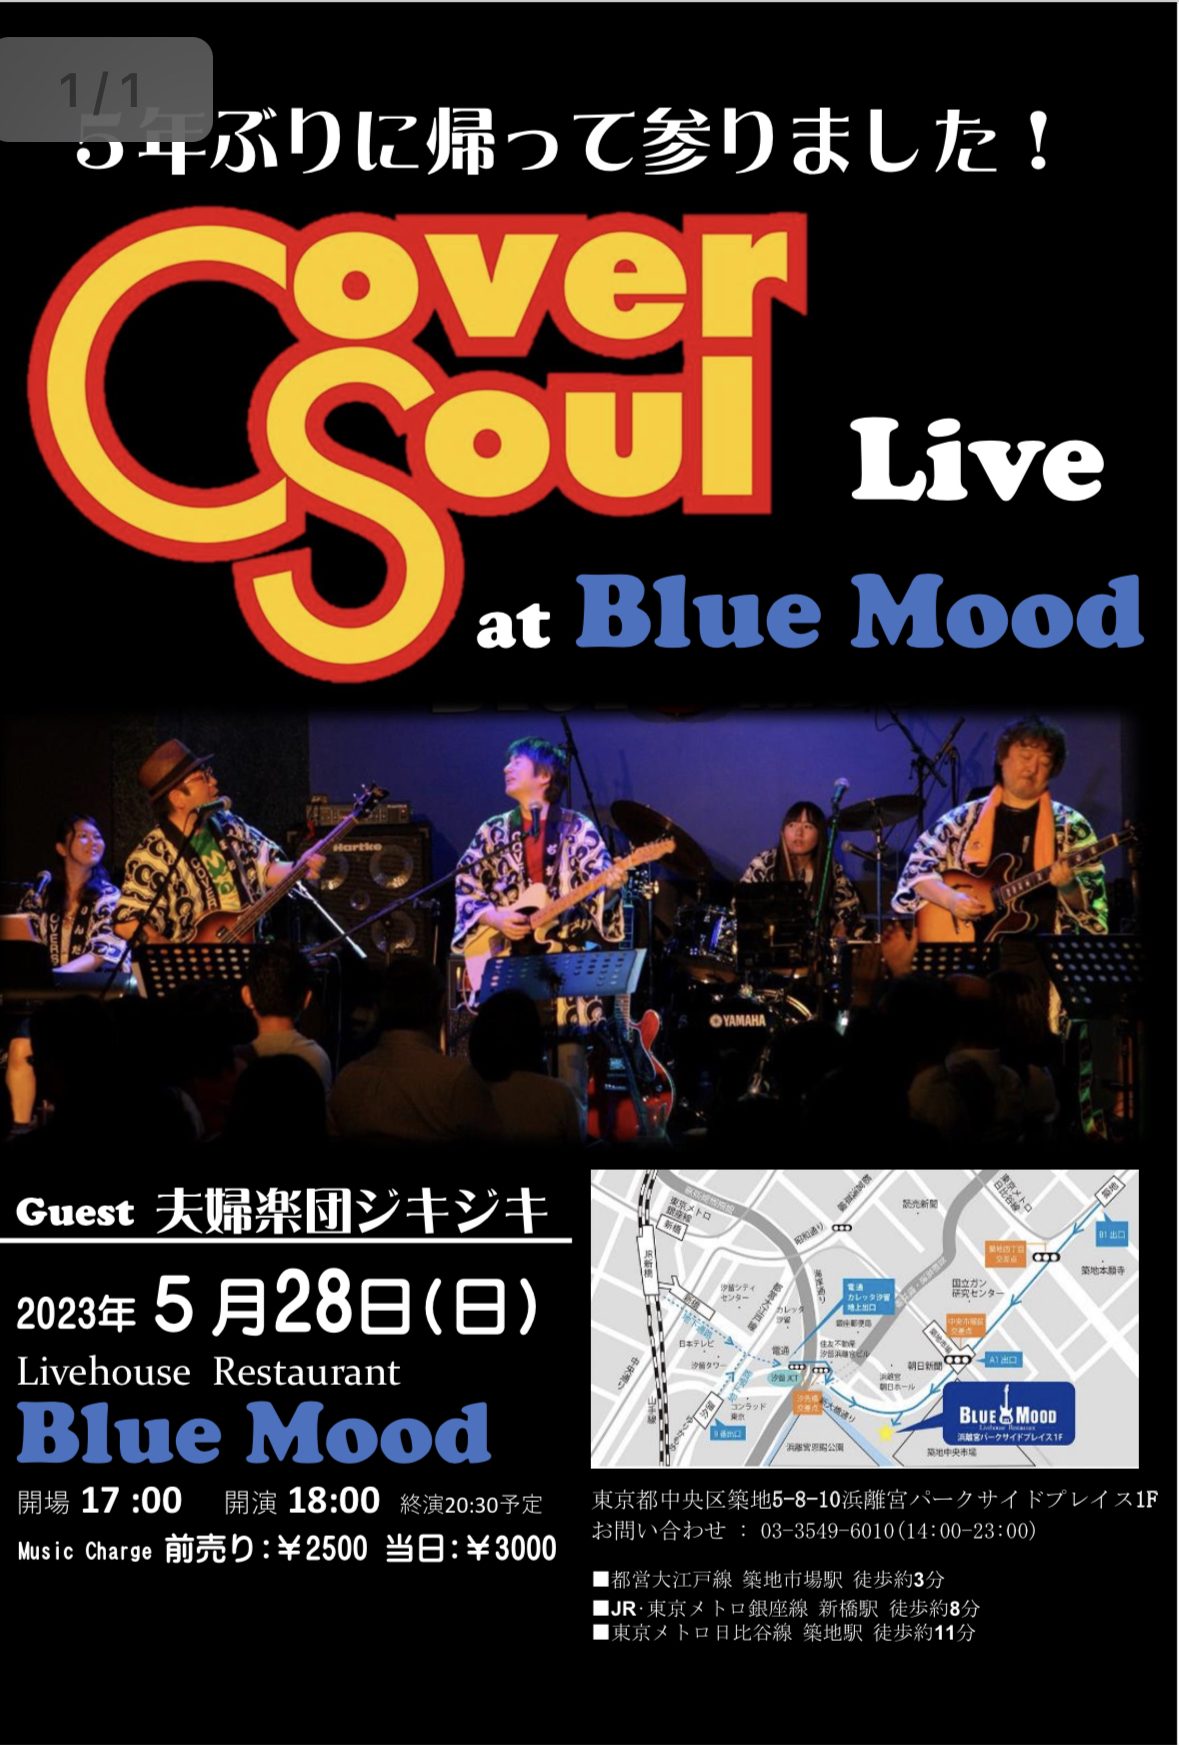 Cover Soul　Live at Blue Mood